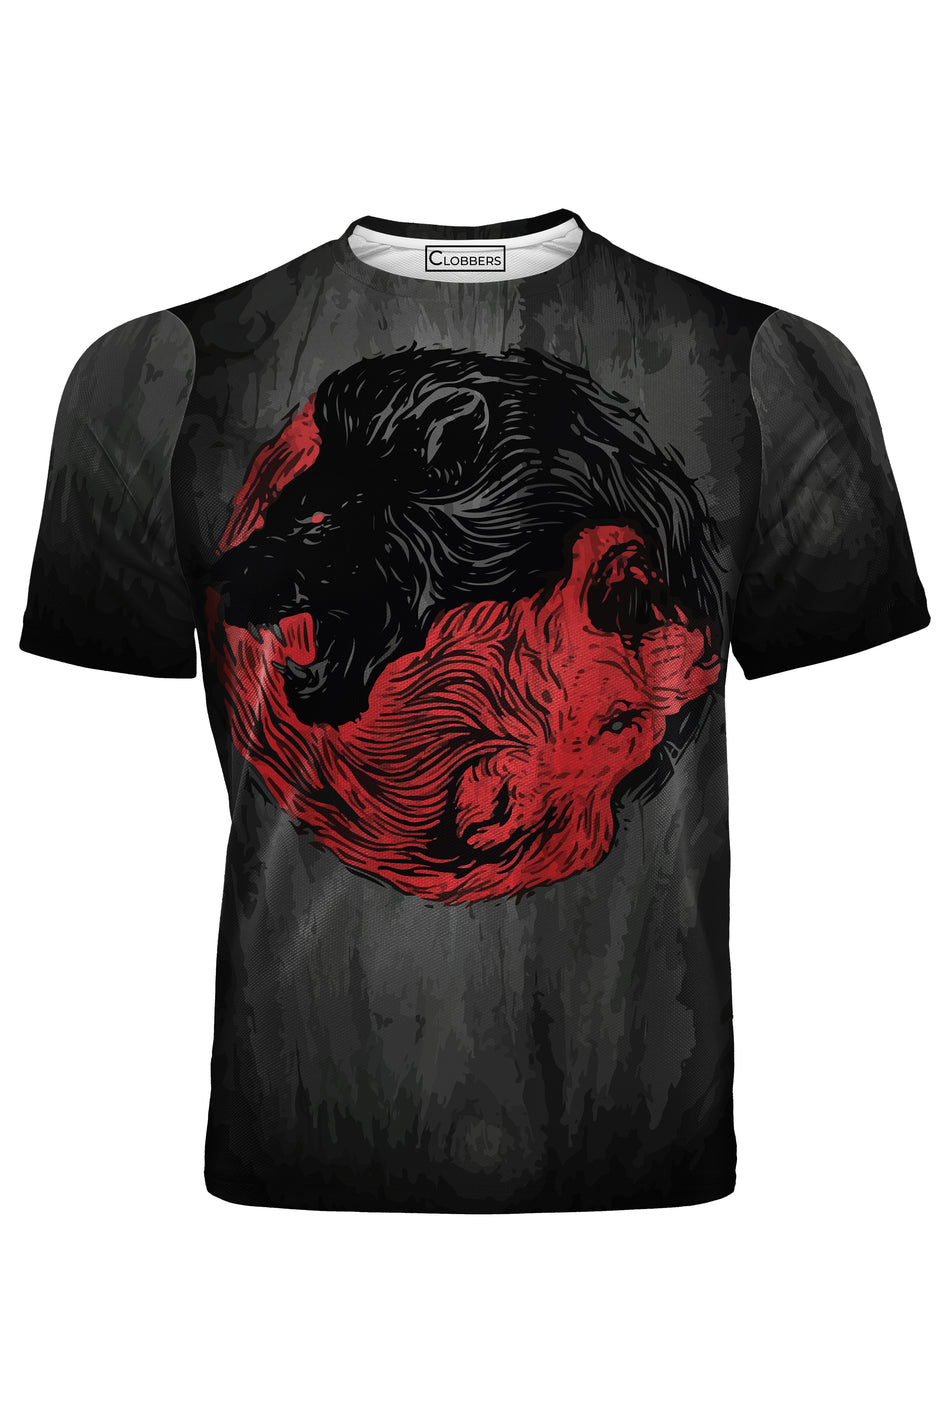 AOUT - RED & BLACK LION TSHIRT